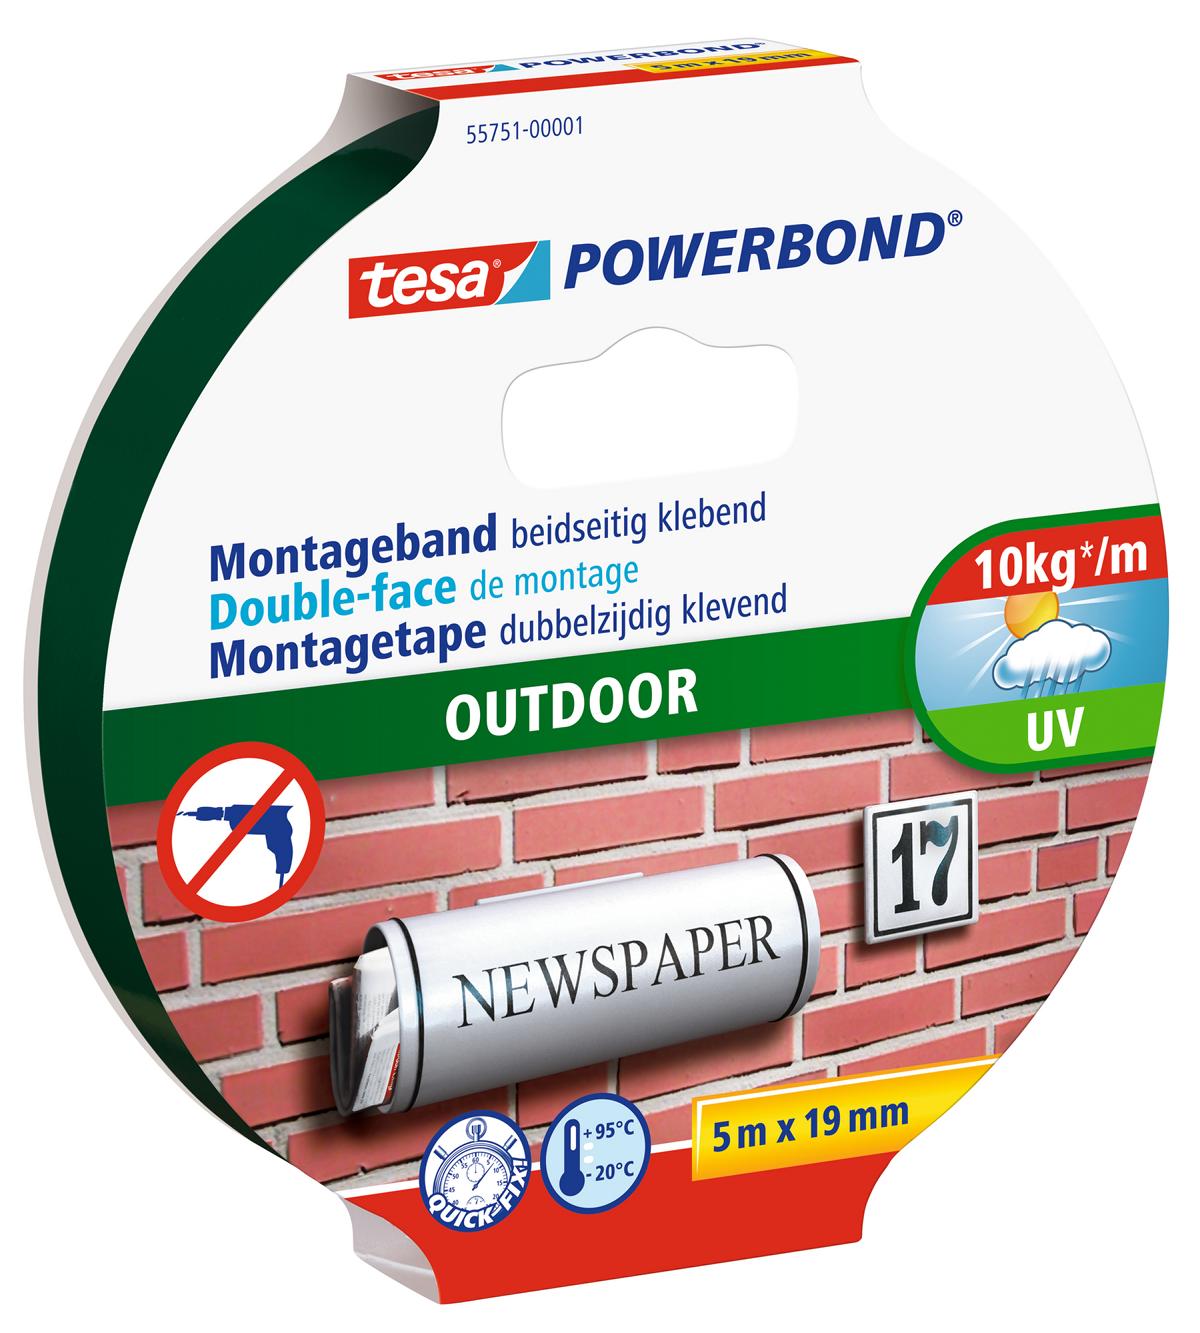 tesa Powerbond Montageband Outdoor, 5 m